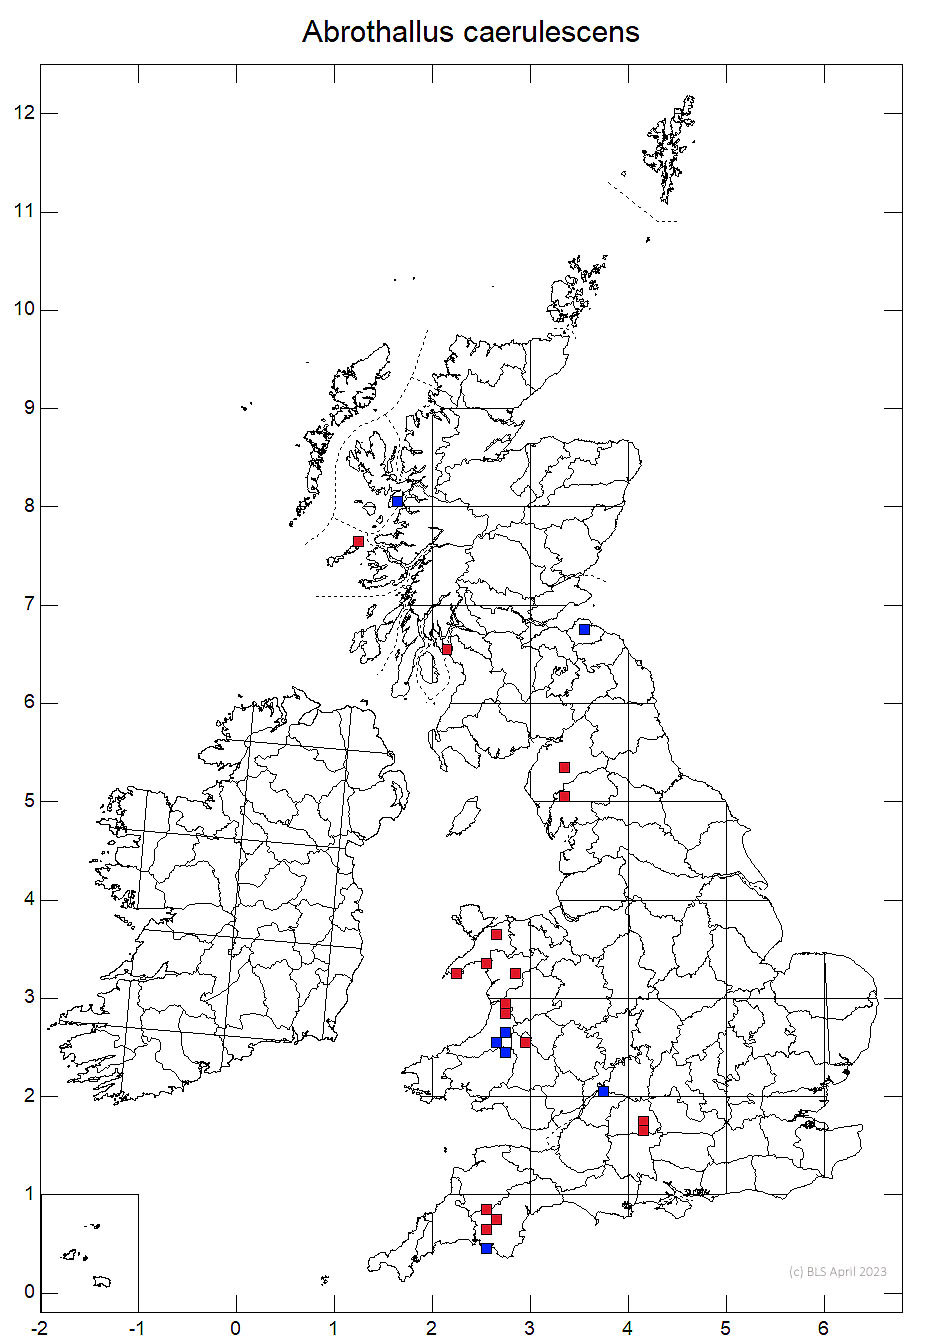 Abrothallus caerulescens 10km sq distribution map